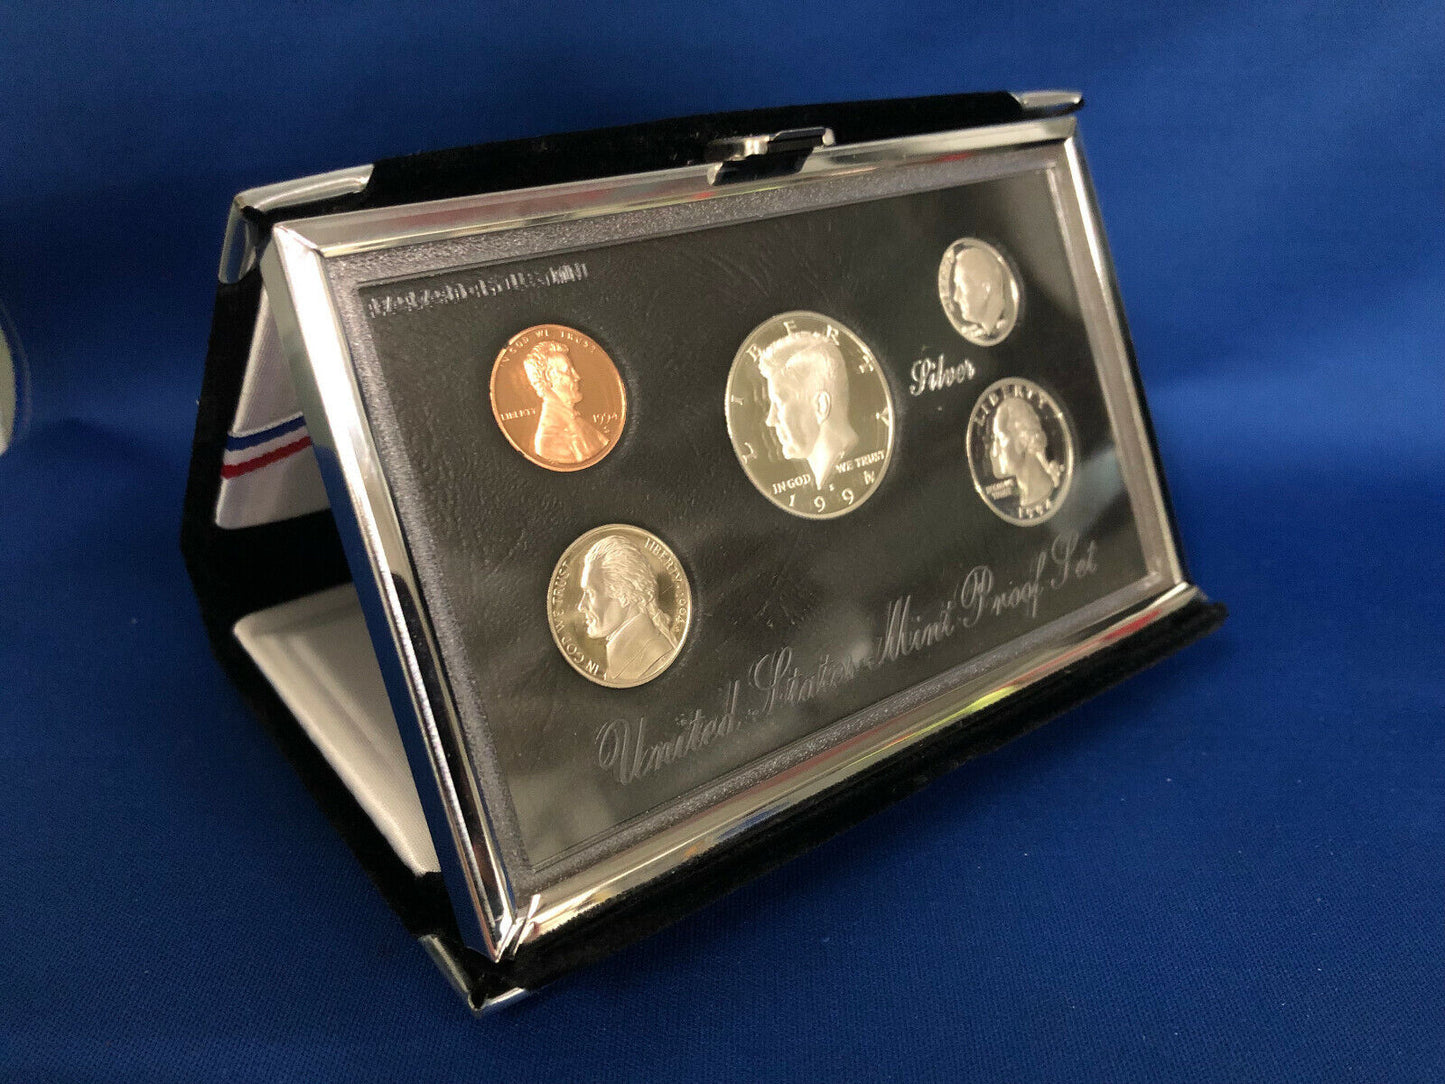 1994 S United States Mint PREMIER Silver Proof Set